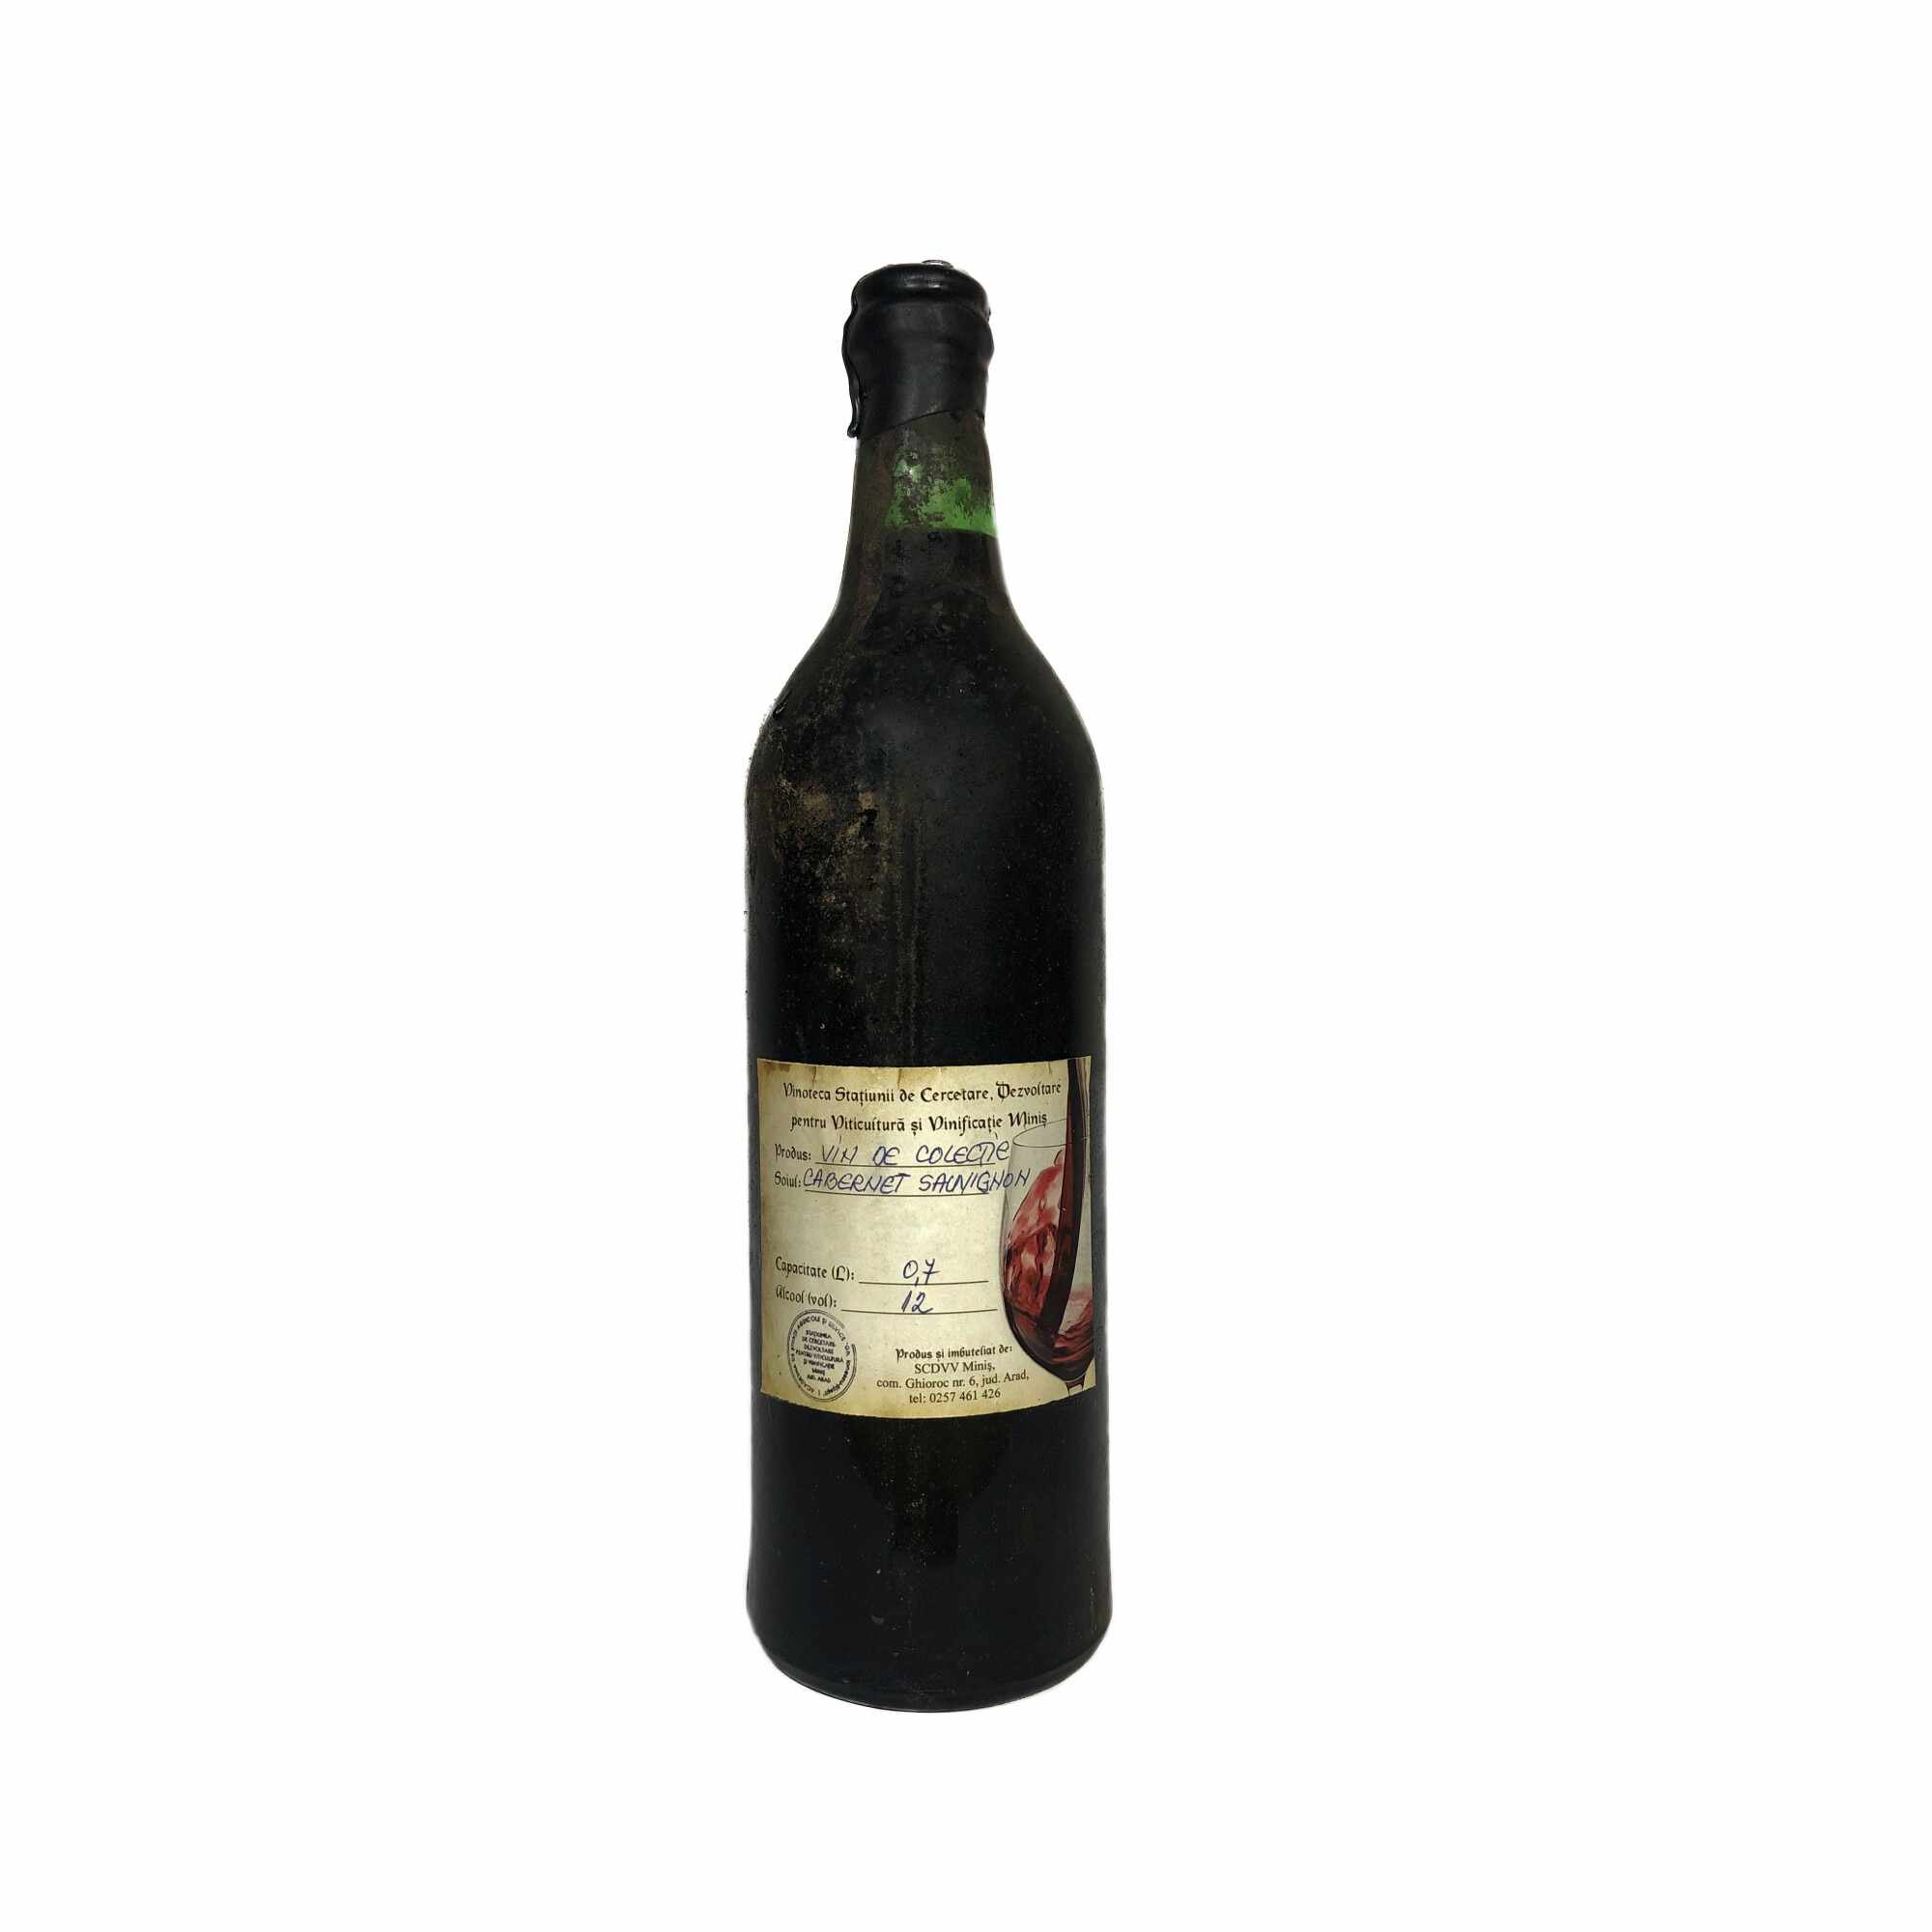 Vin rosu de colectie Cabernet Sauvignon - Anul 1963 in cutie de lemn, 700 ml